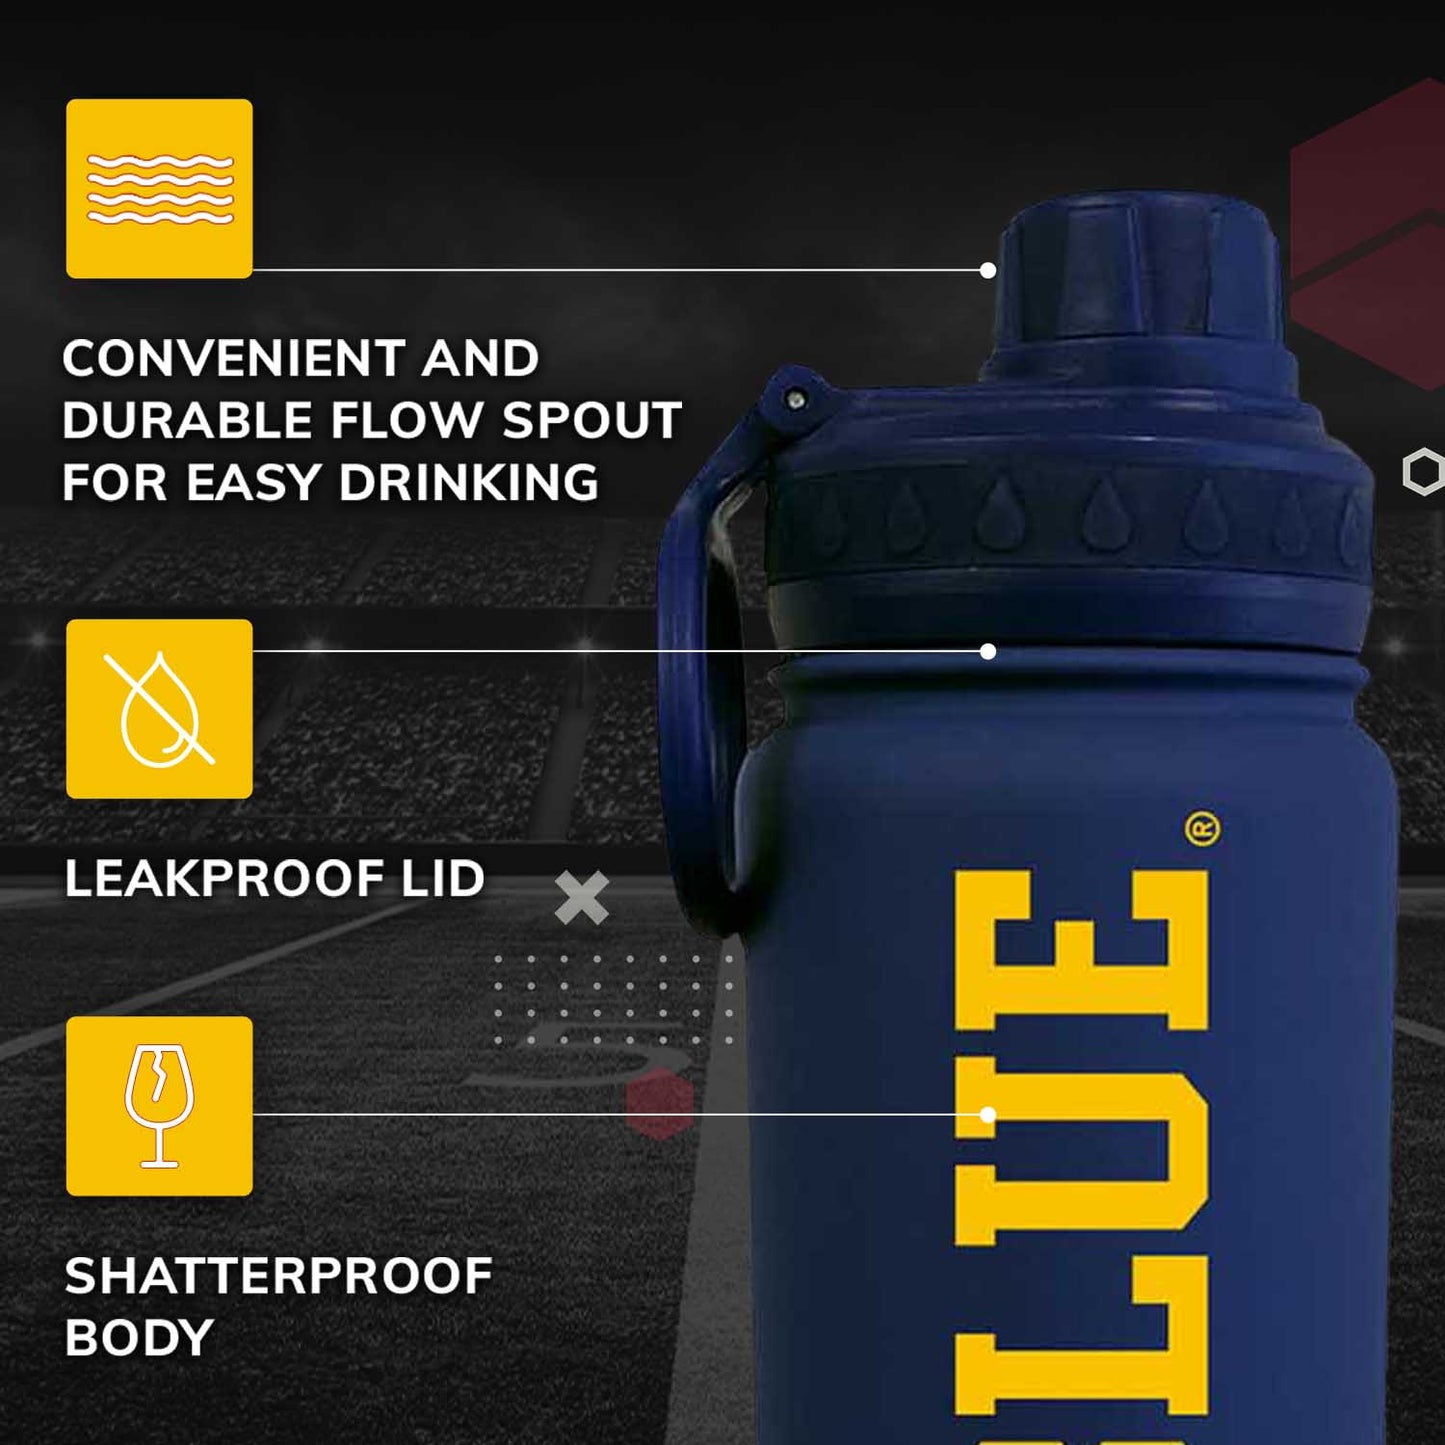 Michigan Wolverines NCAA Stainless Steel Water Bottle - Navy